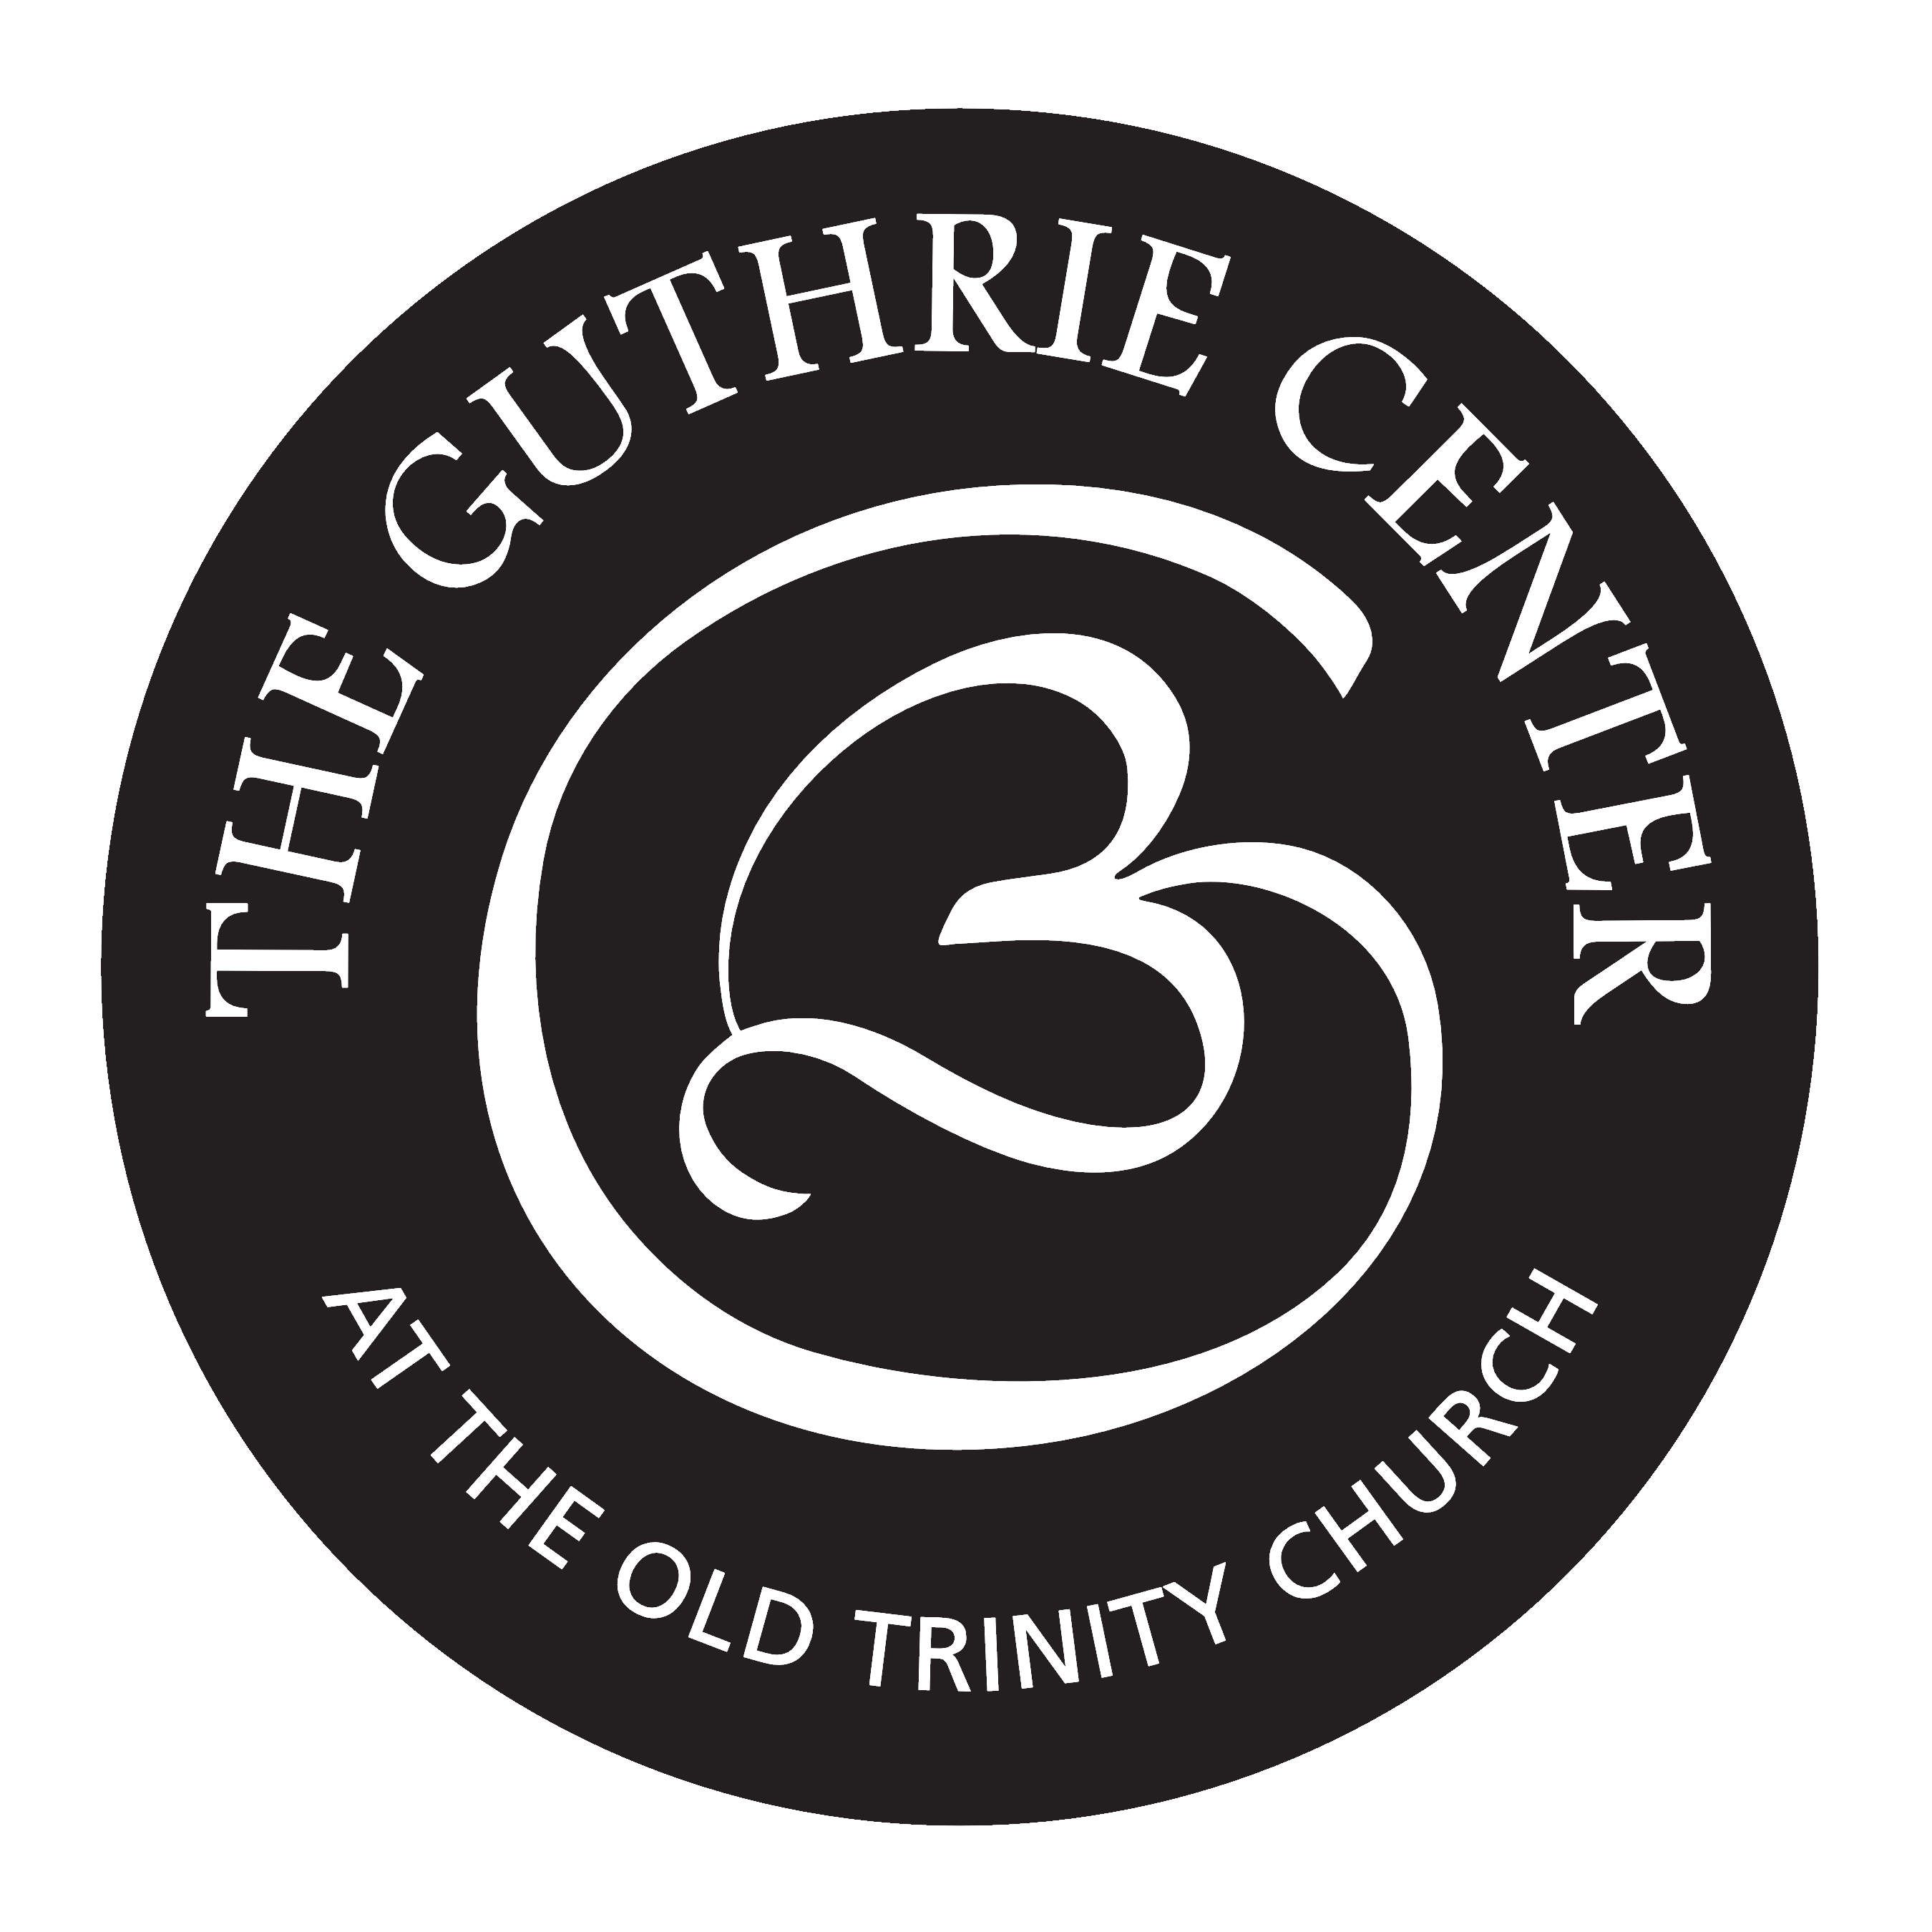 The Guthrie Center